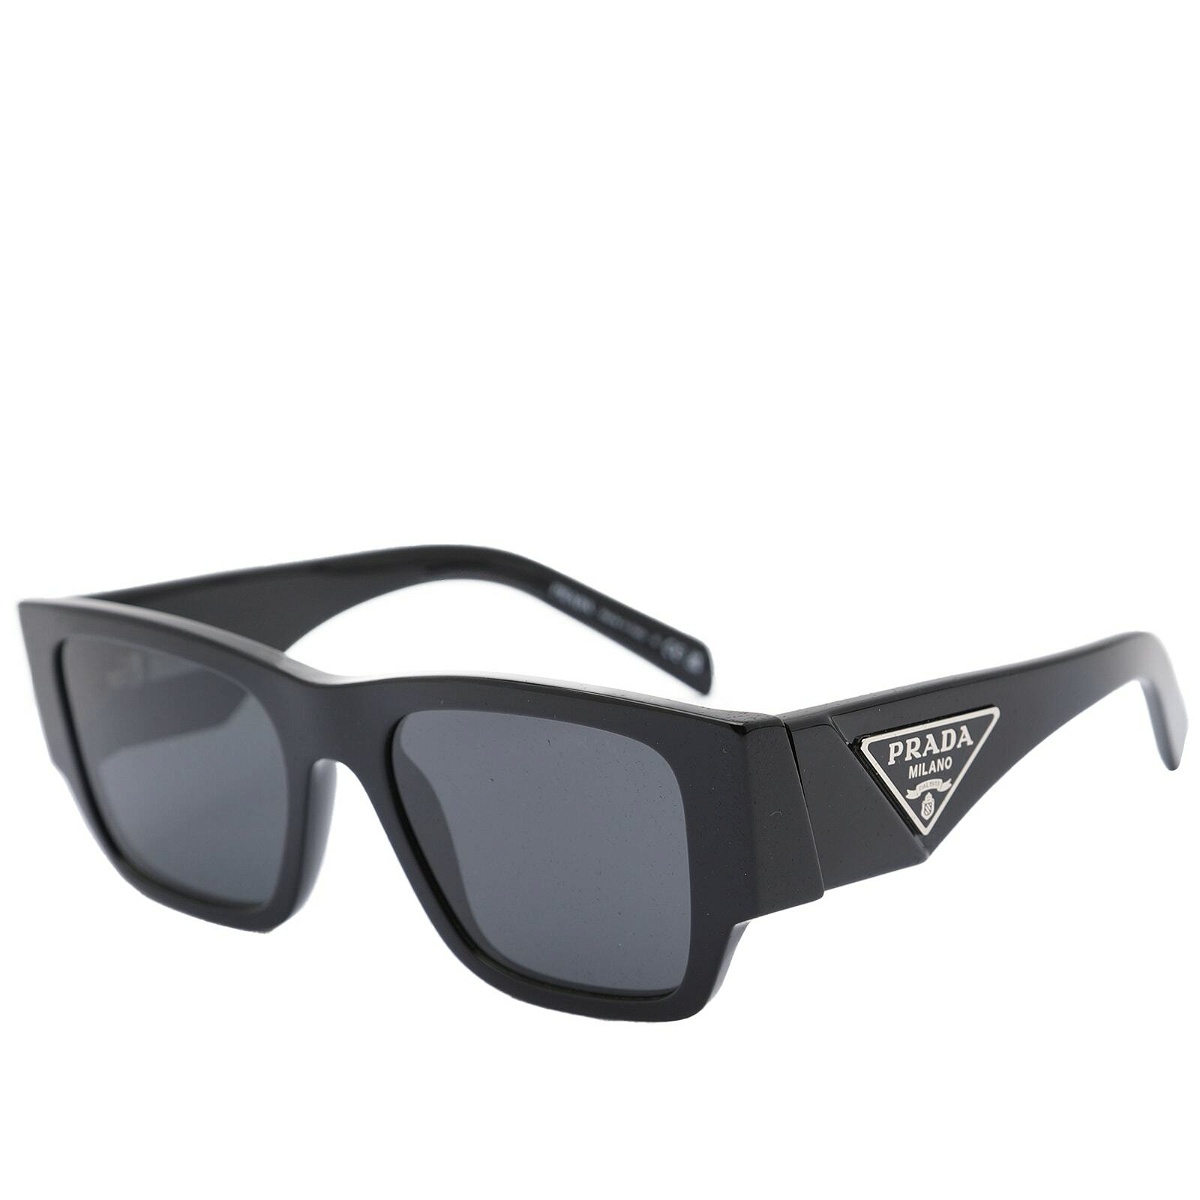 Prada Eyewear Men's PR 10ZS Sunglasses in Black Prada